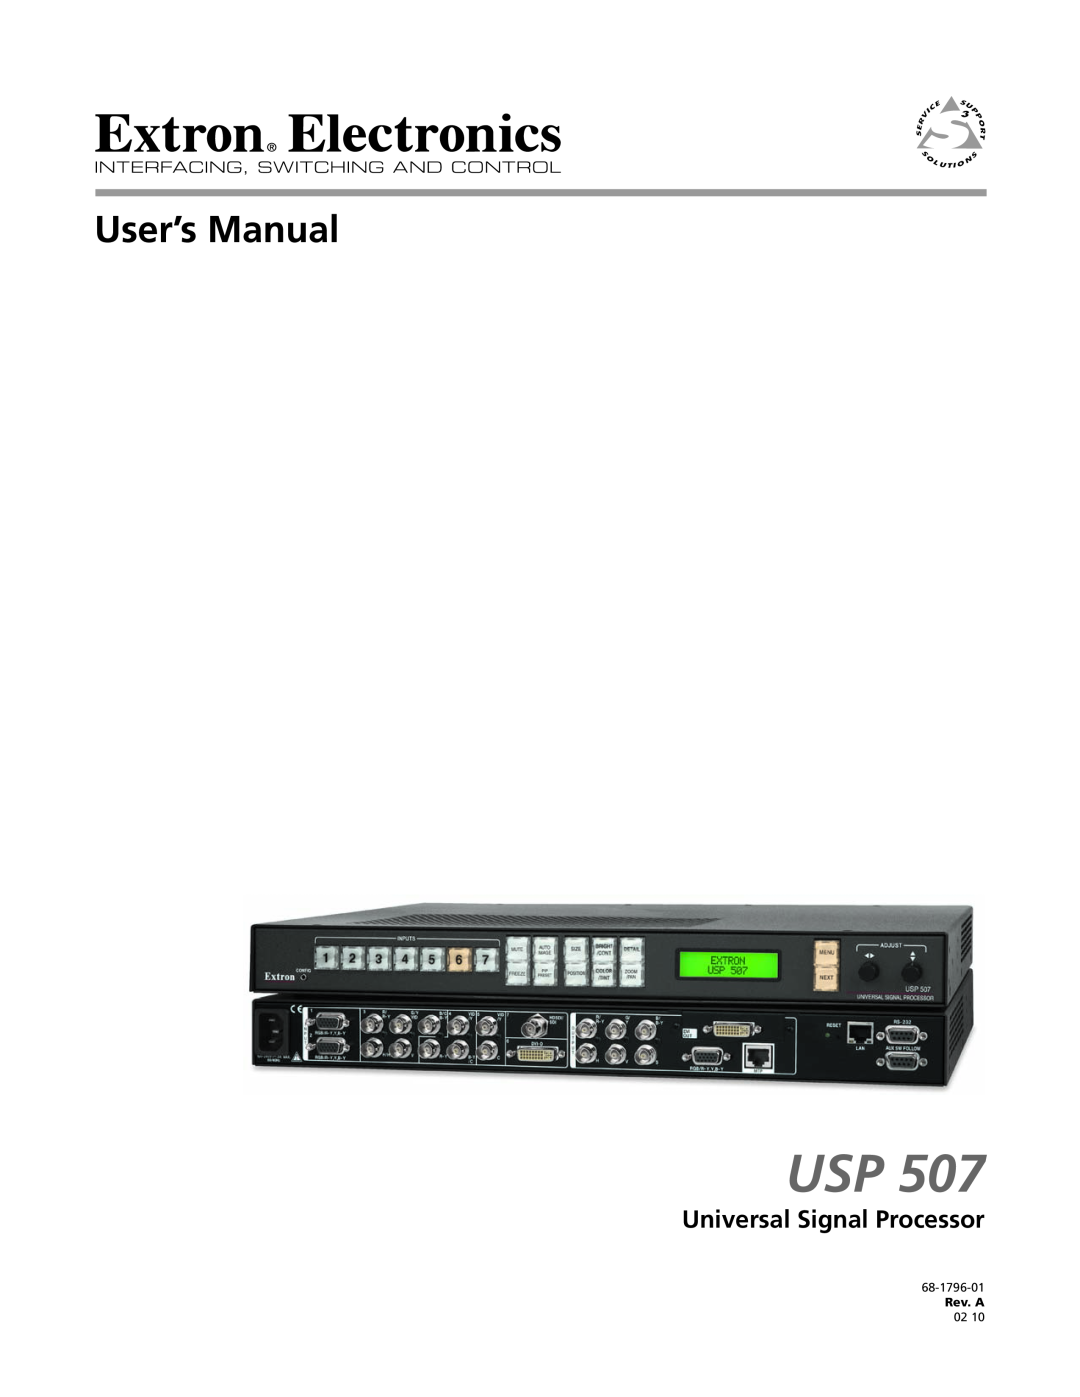 Extron electronic USP 507 manual Universal Signal Processor, Rev. A 